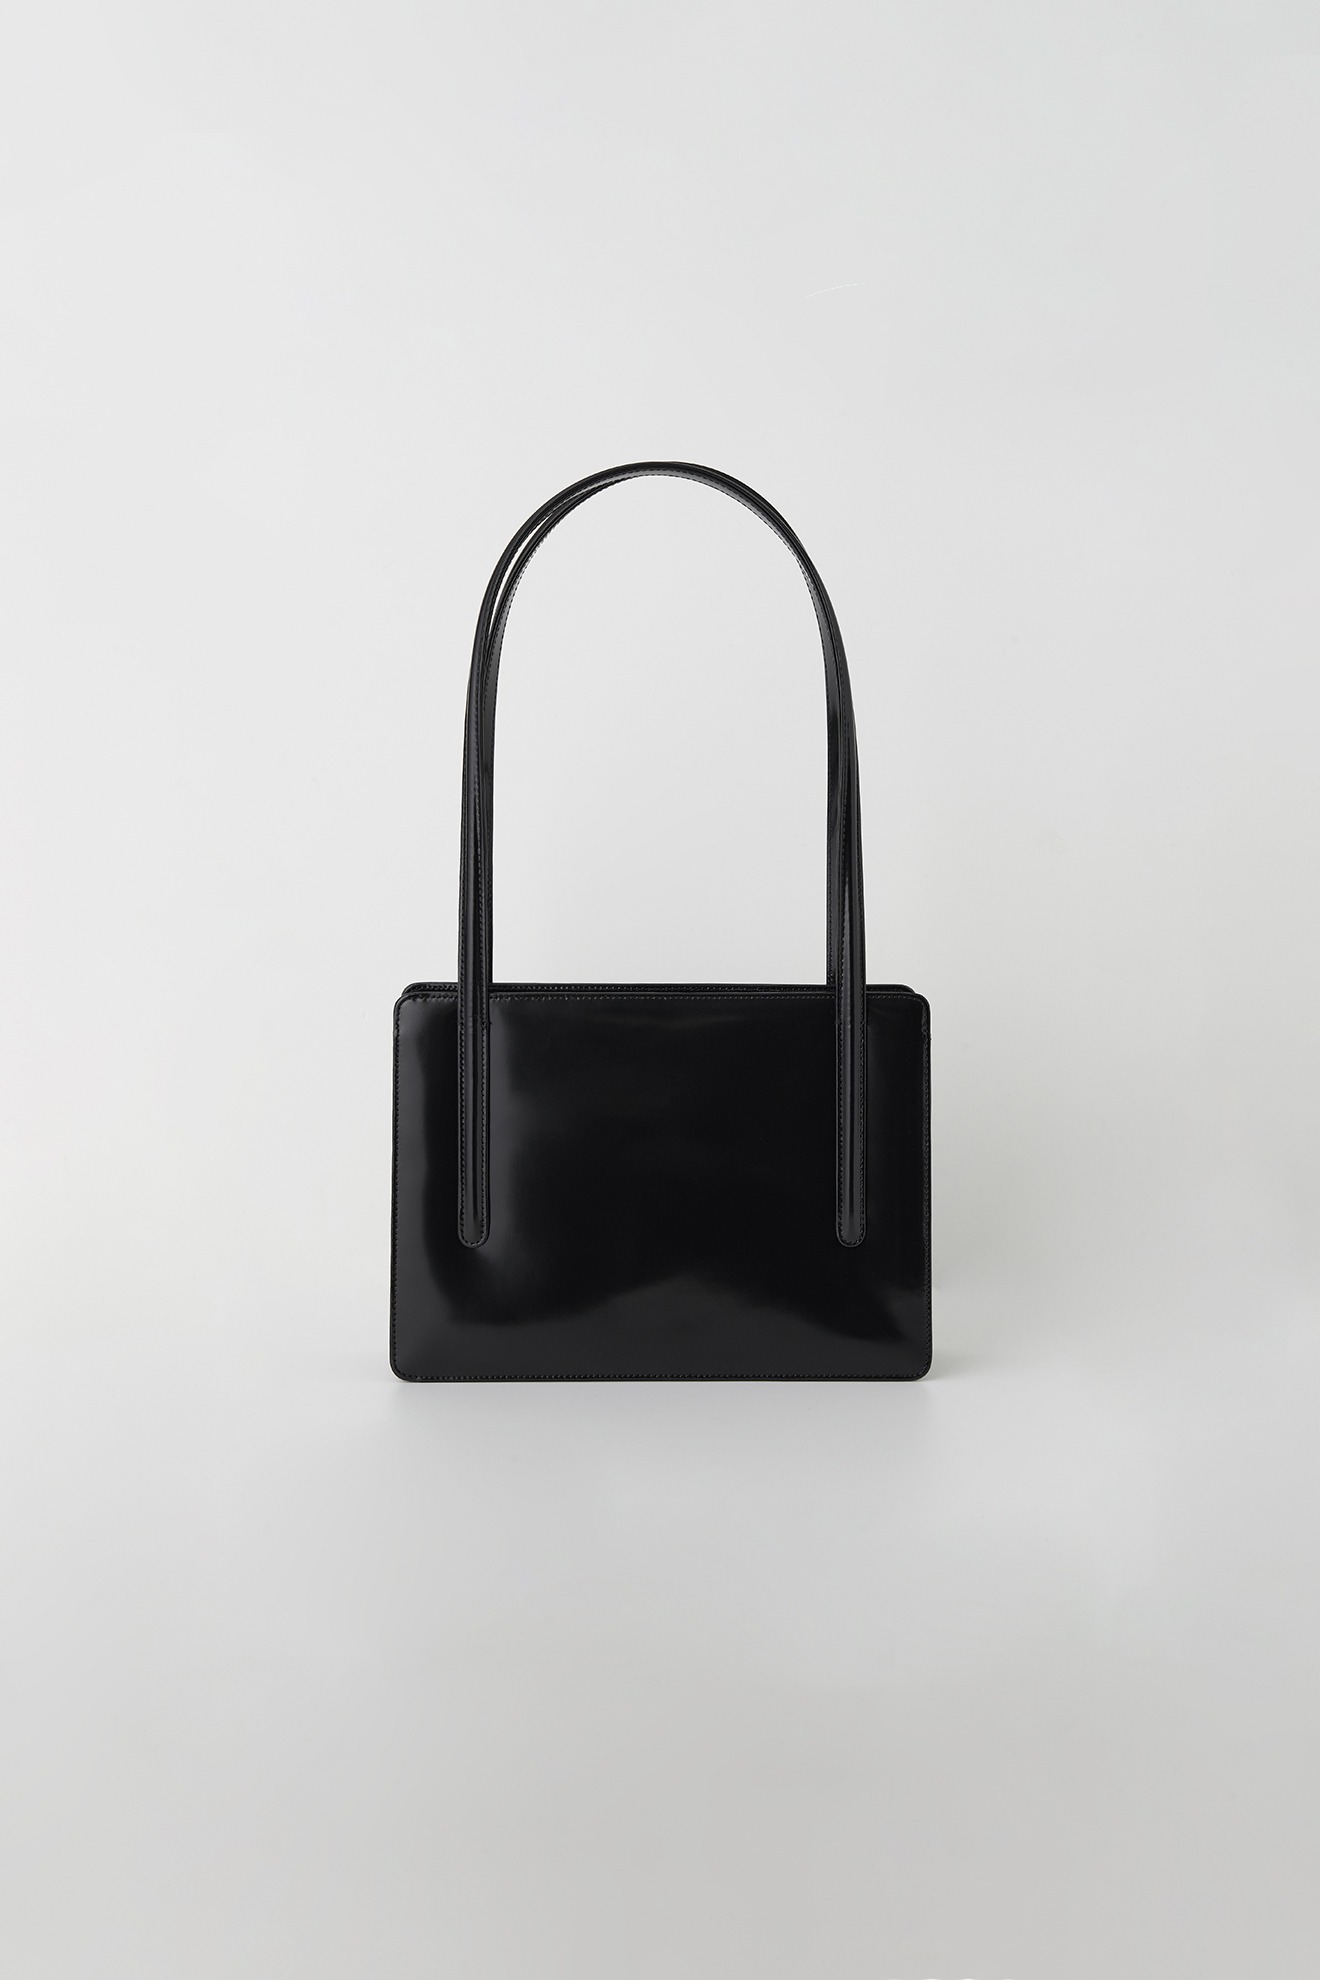 Vox Square Bag (black)